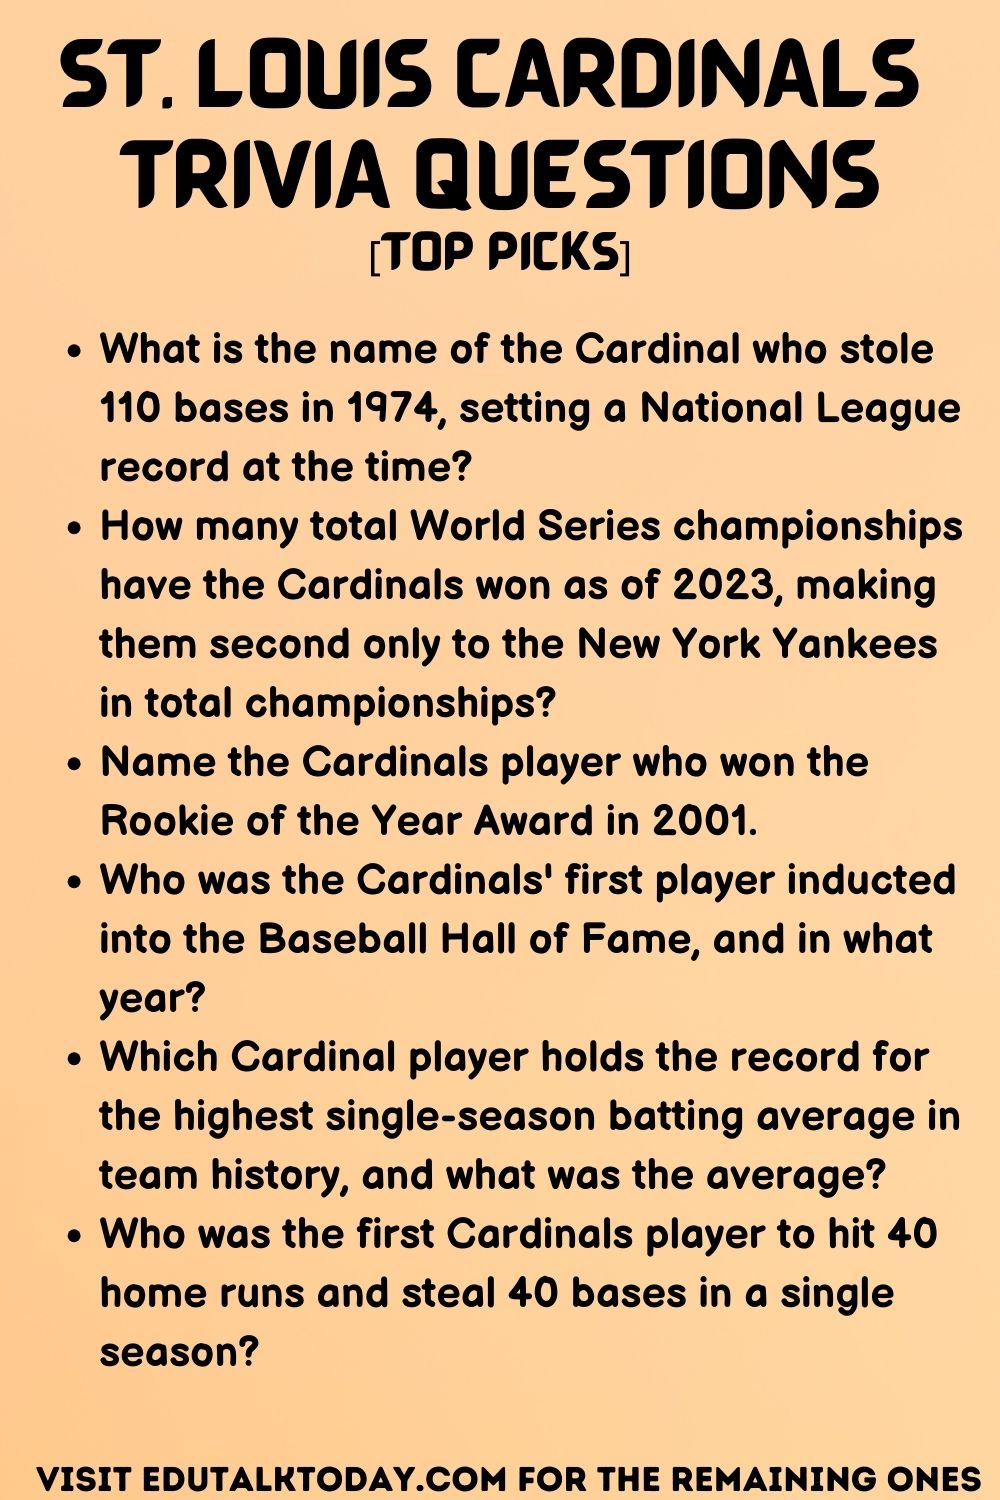 St. Louis Cardinals Trivia Questions